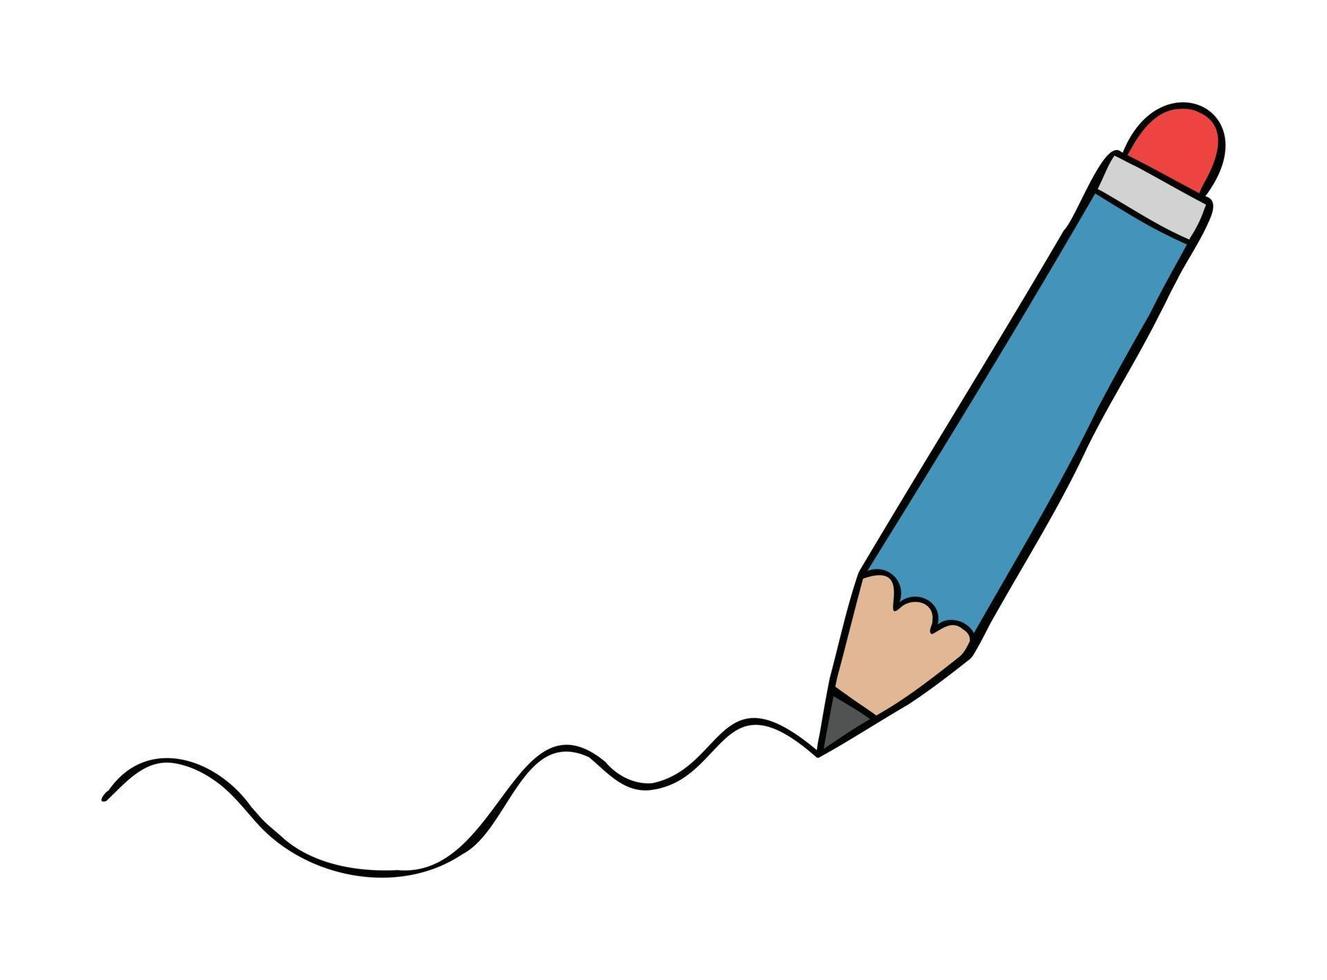 Cartoon Vector Illustration of Pencil Draws a Wavy Line